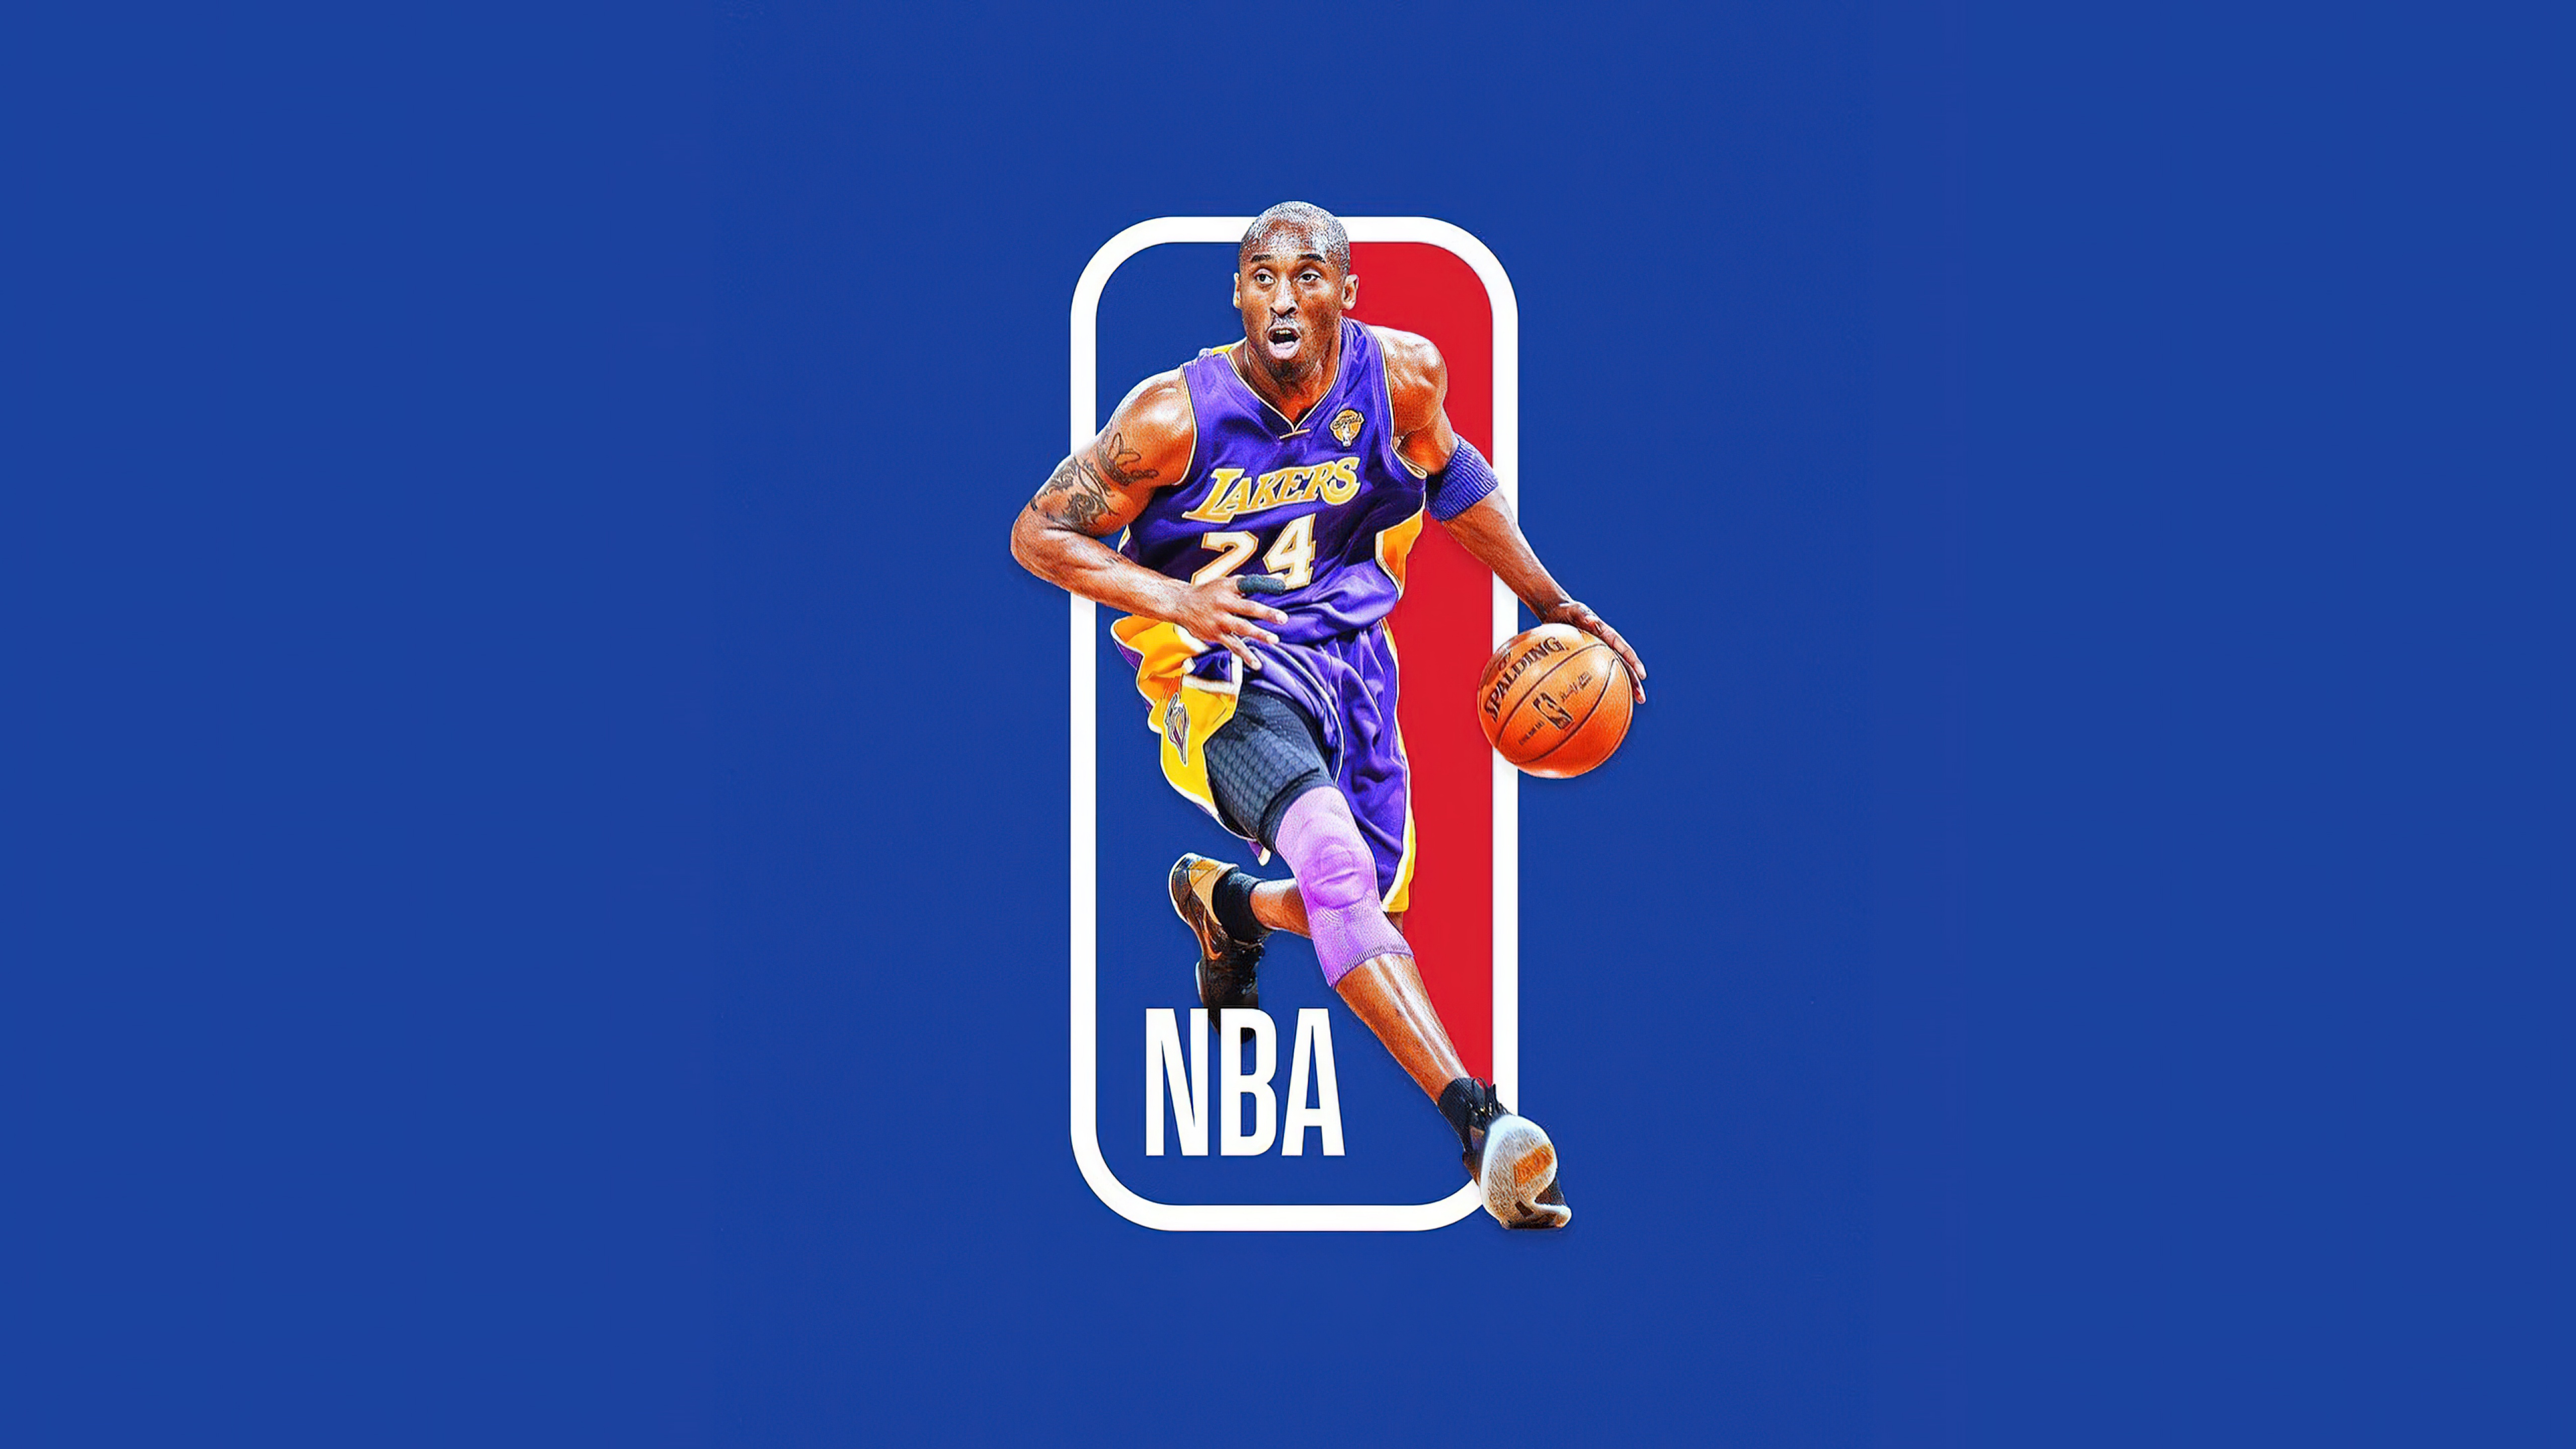 HD wallpaper Kobe Bryant Legend2016 NBA Poster HD Wallpaper Kobe Bryant  with legend text overlay  Wallpaper Flare